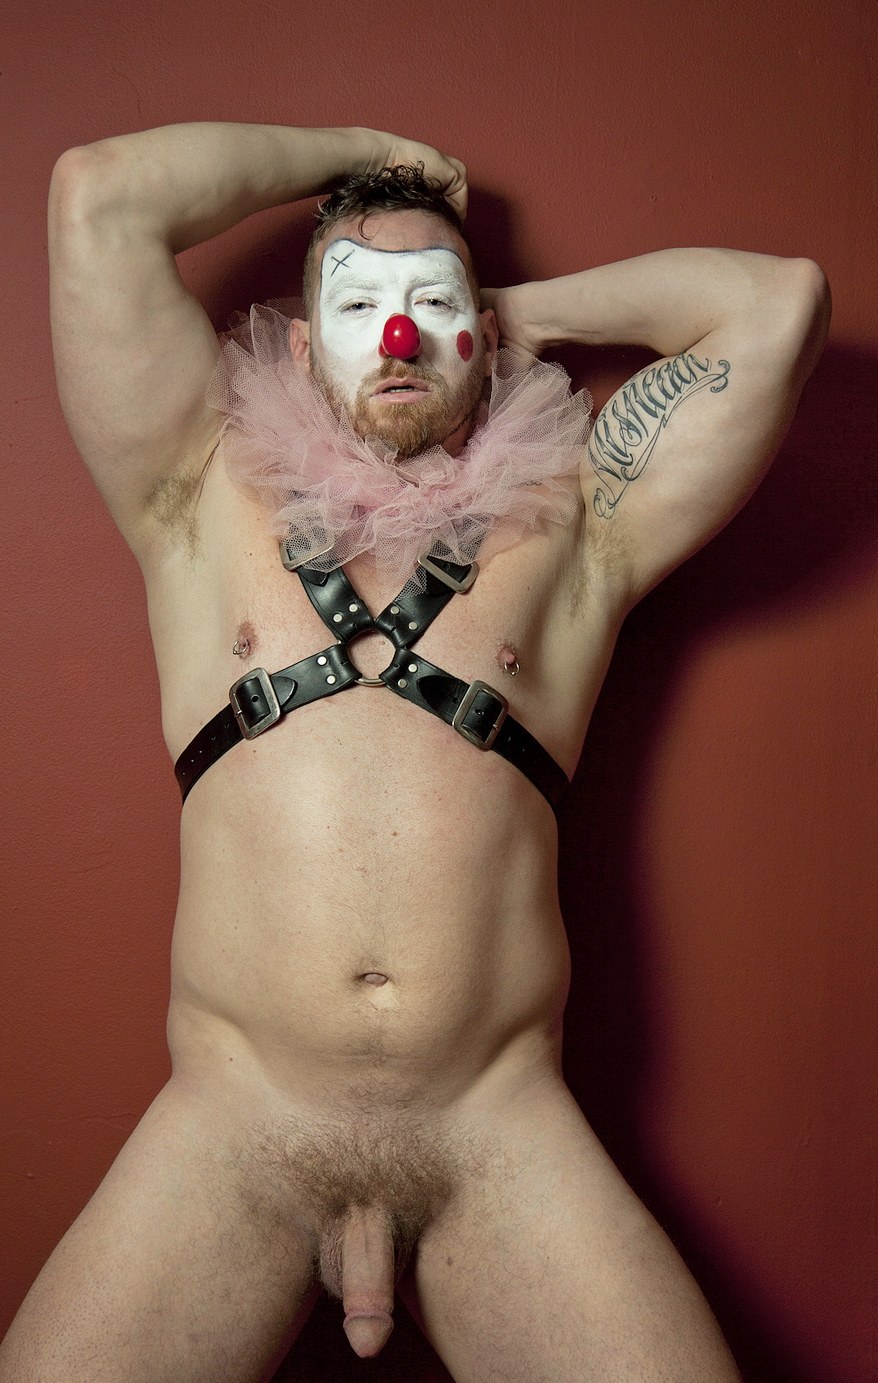 Gibby the clown porn